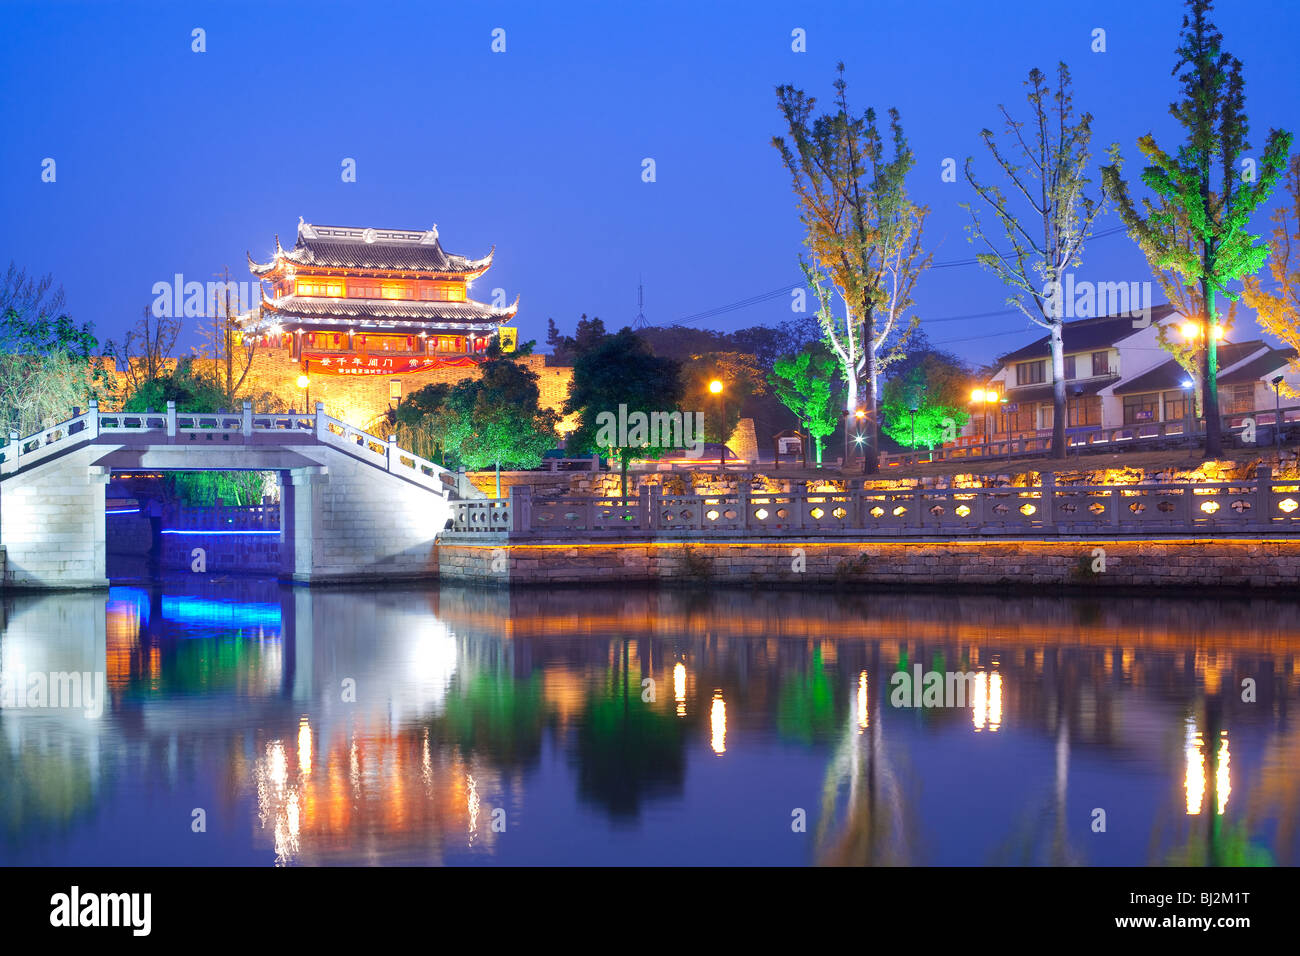 Illuminated Pagoda and canal at Suzhou, Jiangsu Province, China, Asia Stock Photo